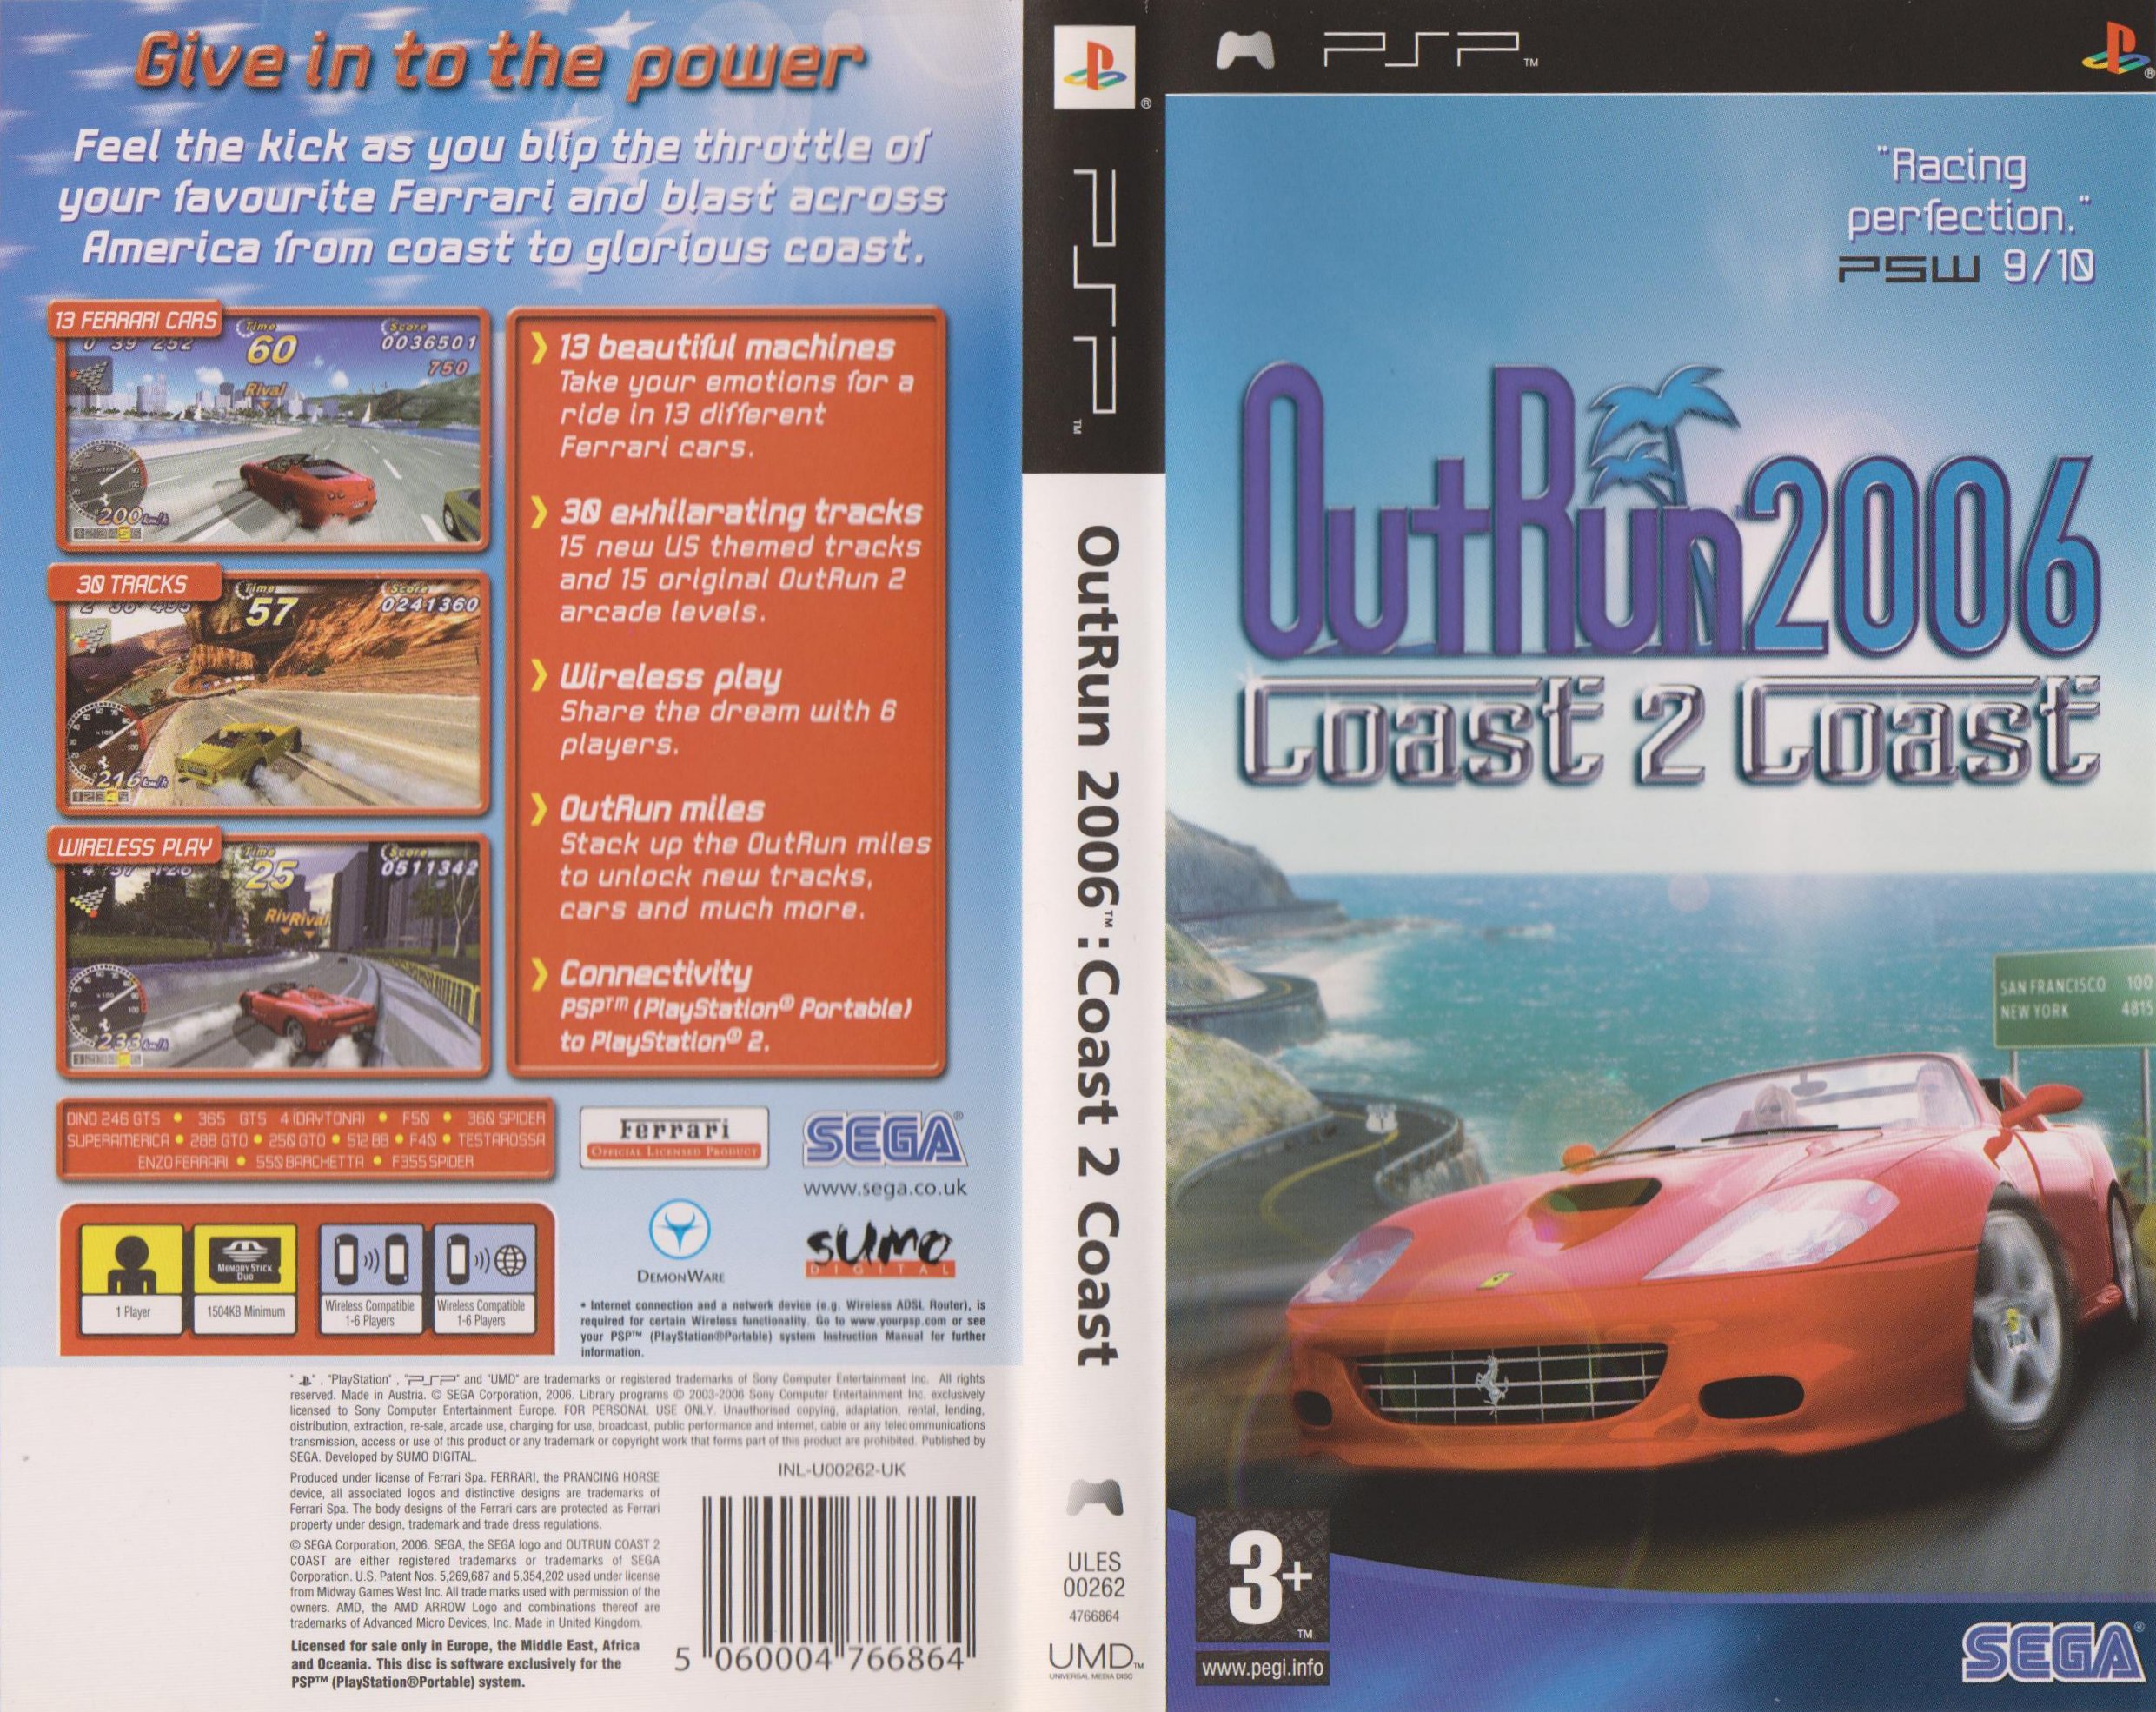 Outrun 2006 coast. Outrun 2006 Coast 2 Coast. Outrun 2006. Outrun PSP. Outrun PLAYSTATION Portable.